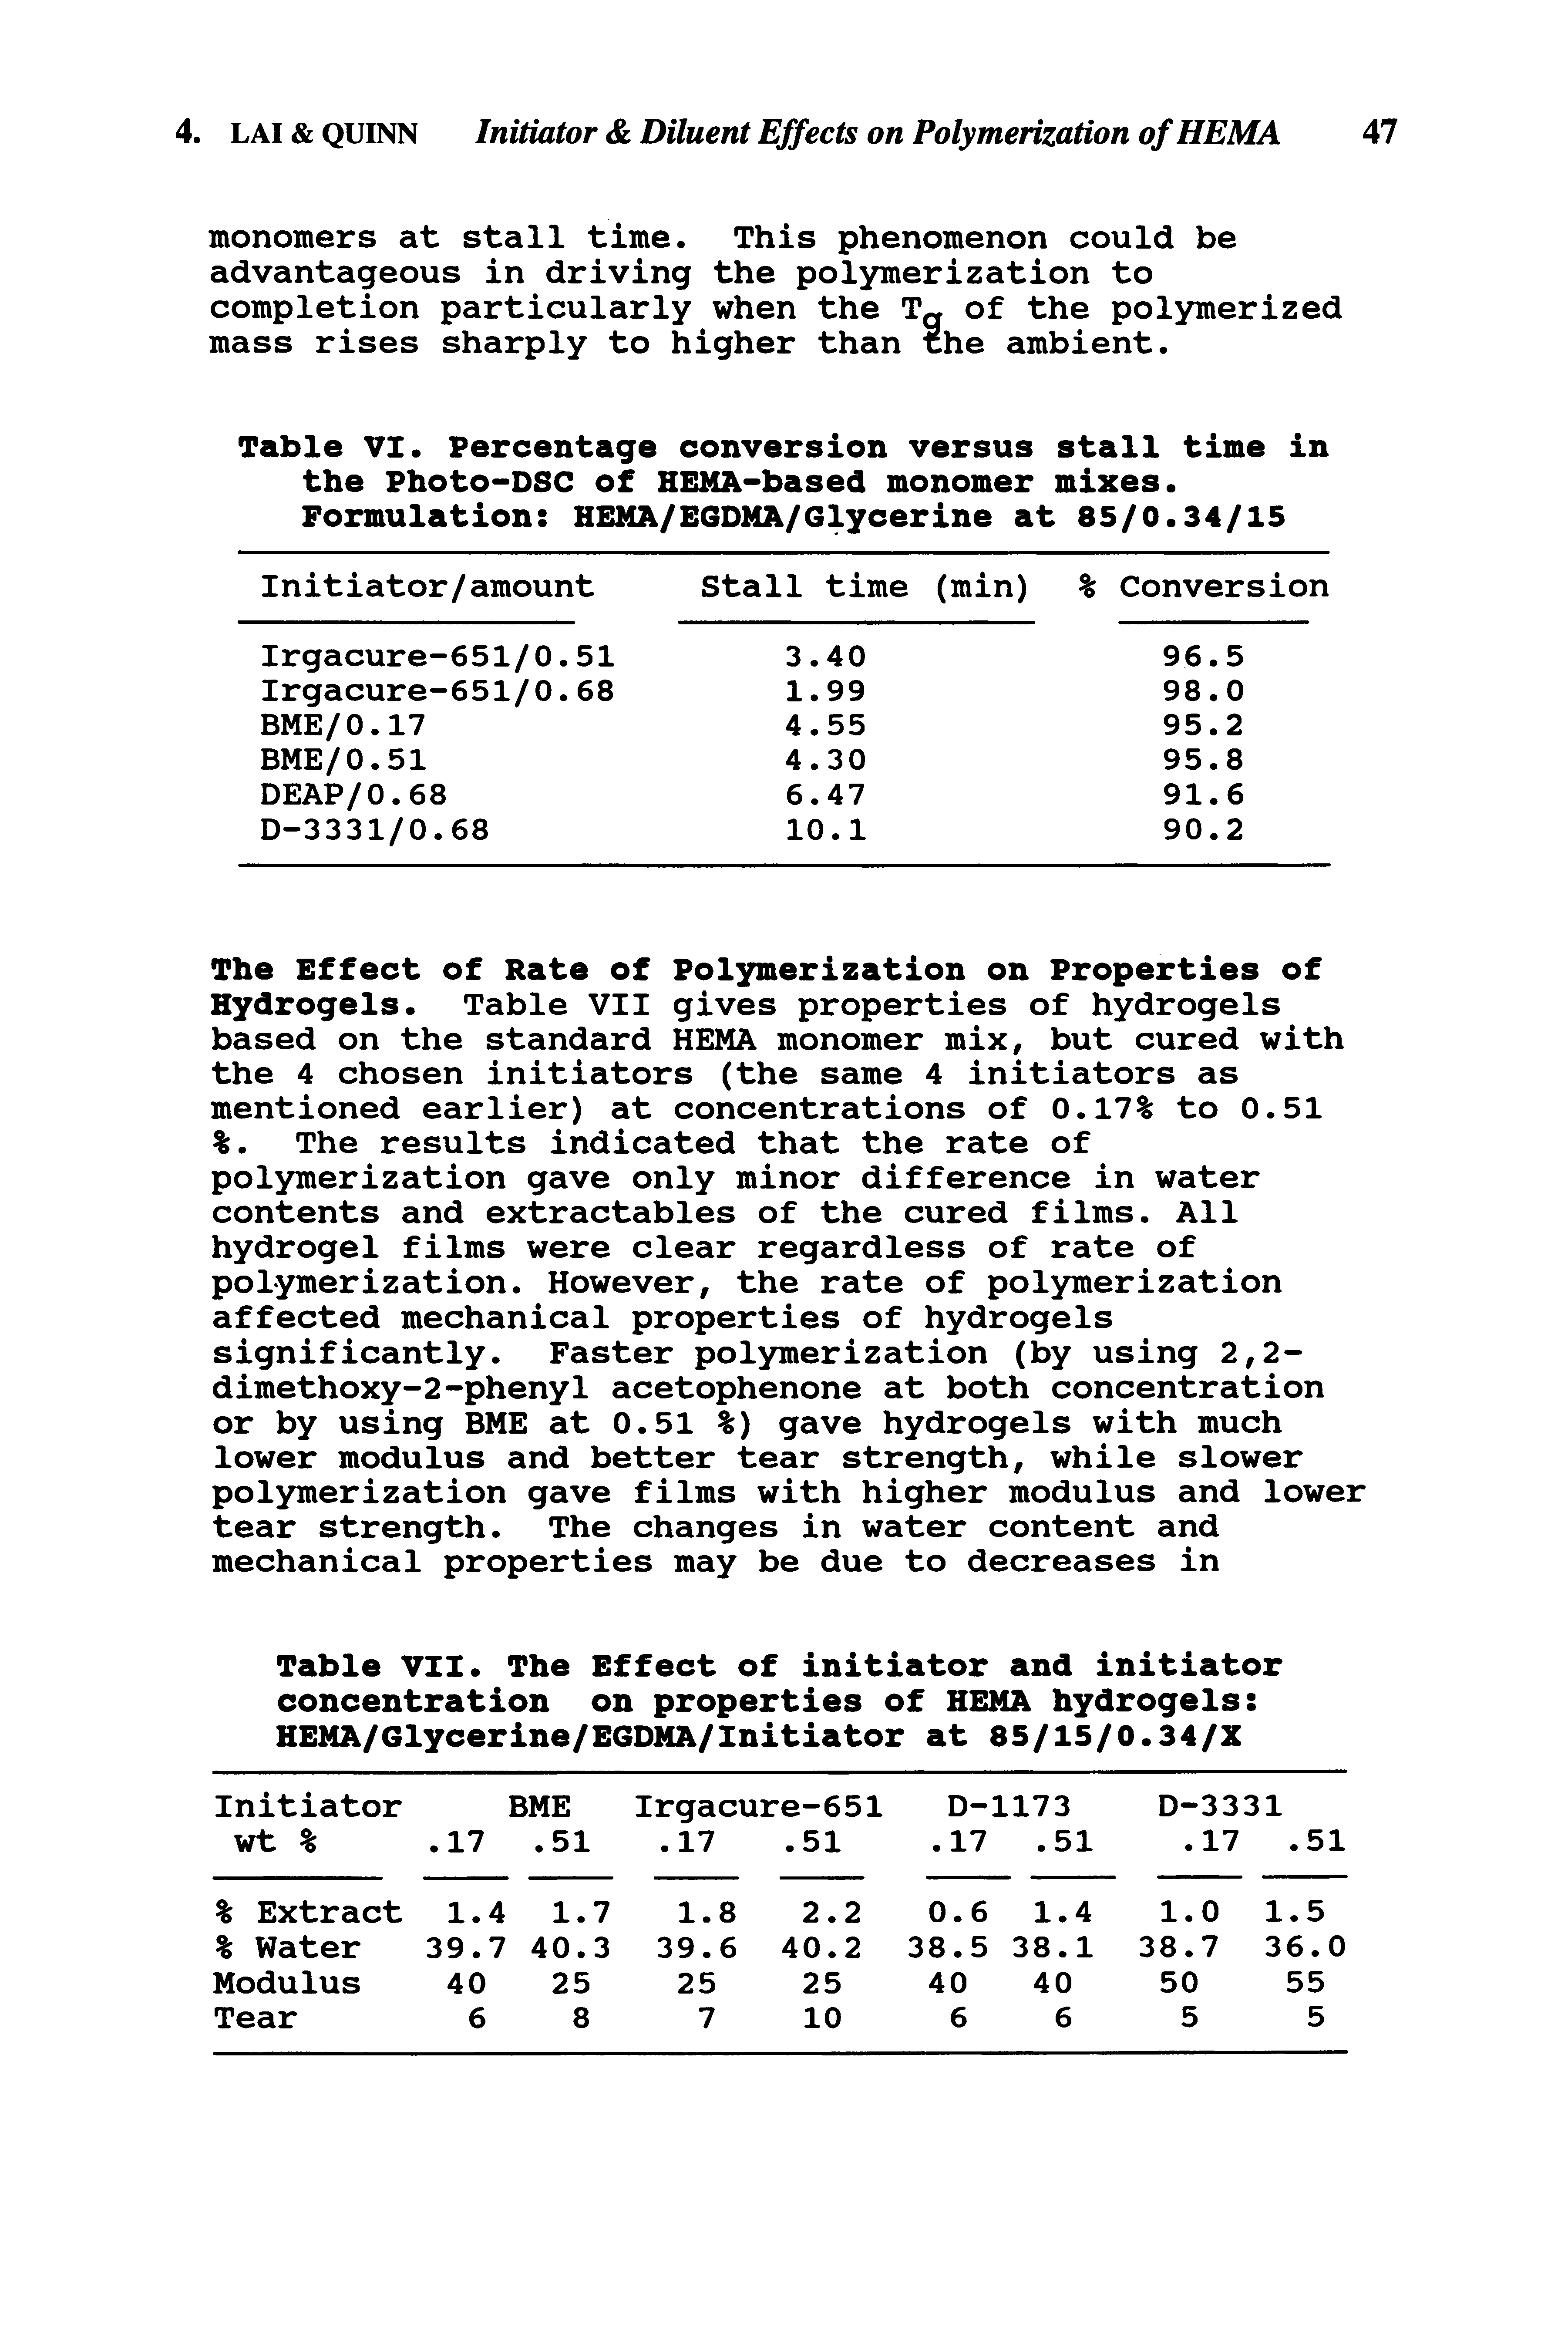 Table VI. Percentage conversion versus stall time in the Photo-DSC of HEMA-based monomer mixes. Formulation HEMA/EGDMA/Glycerine at 85/0.34/15...